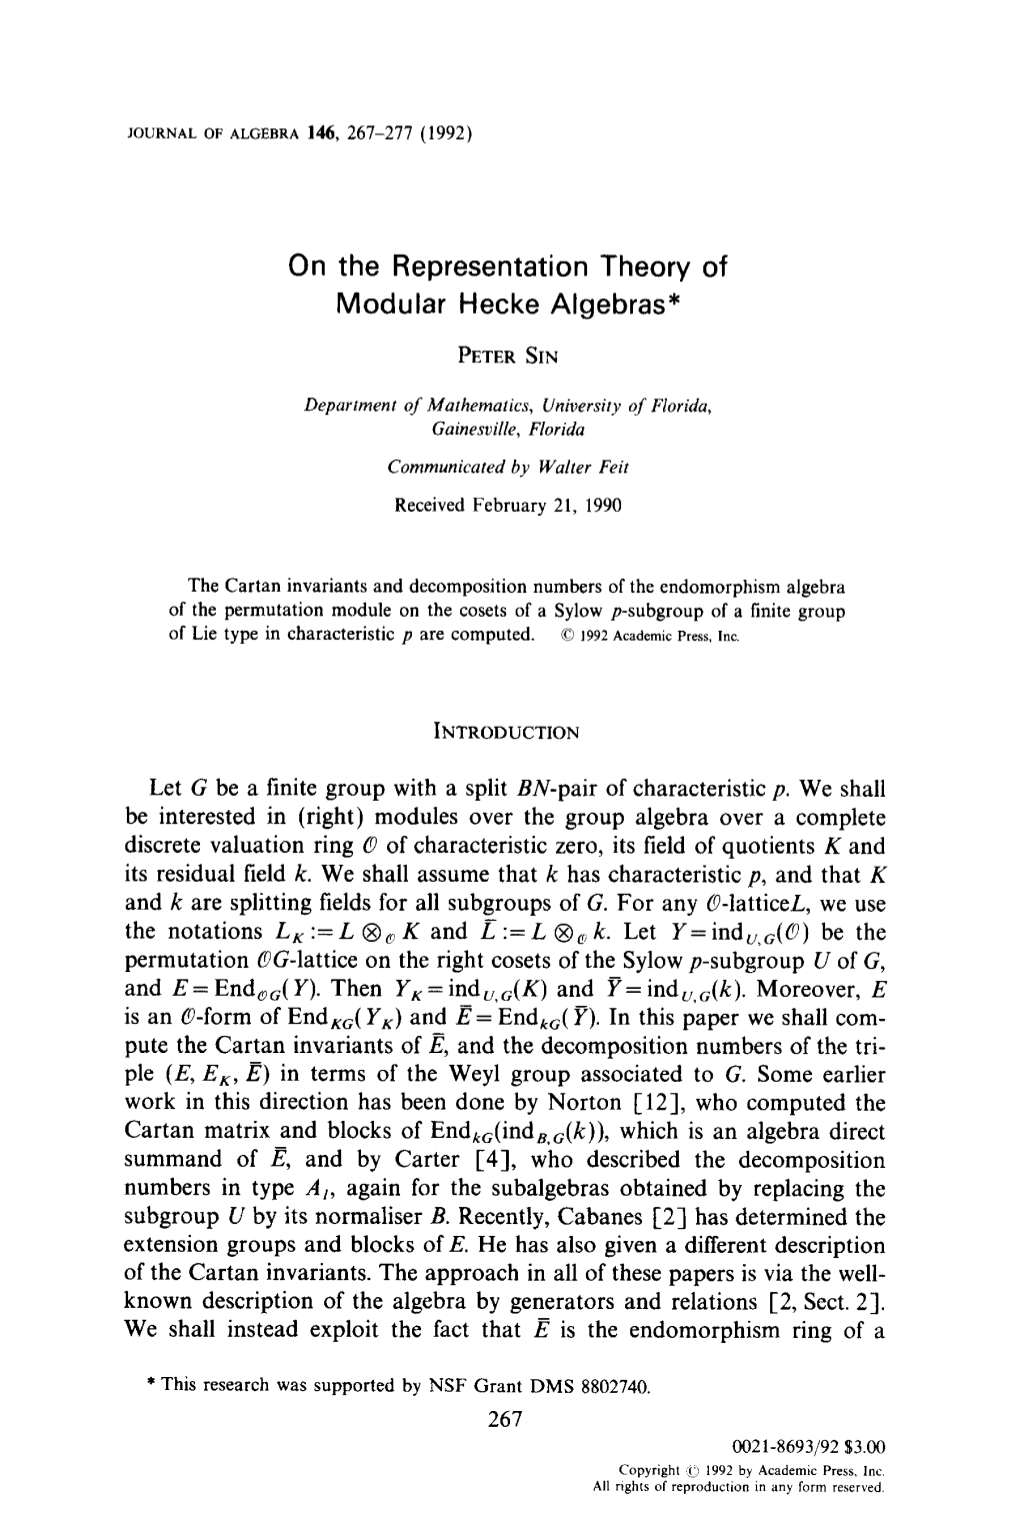 On the Representation Theory of Modular Hecke Algebras*